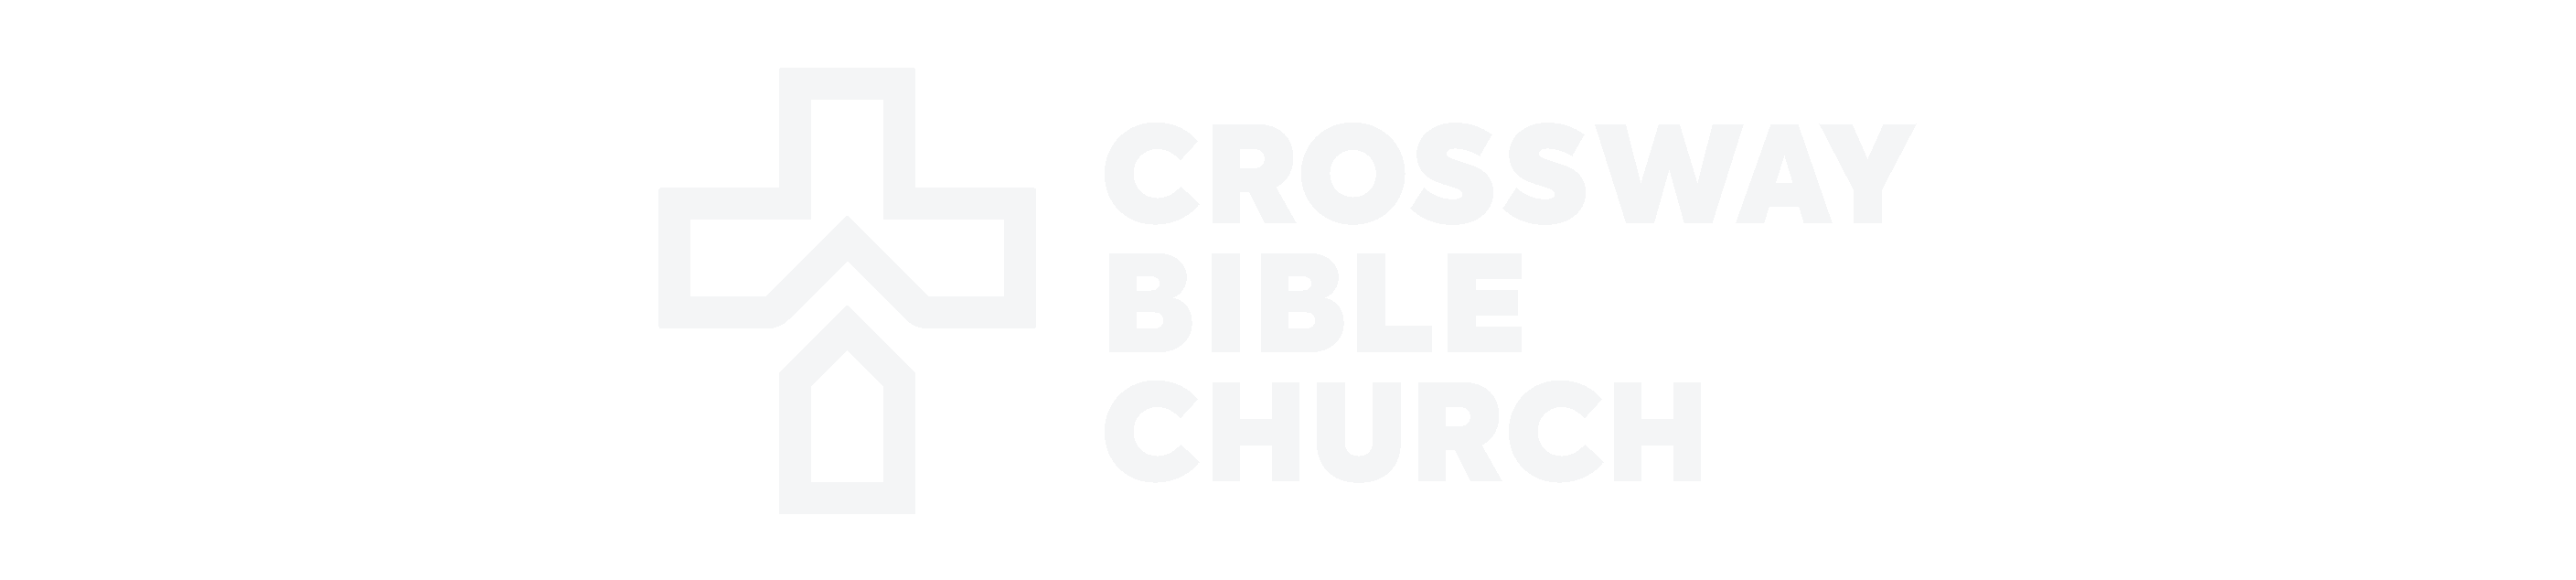 Crossway Bible Church